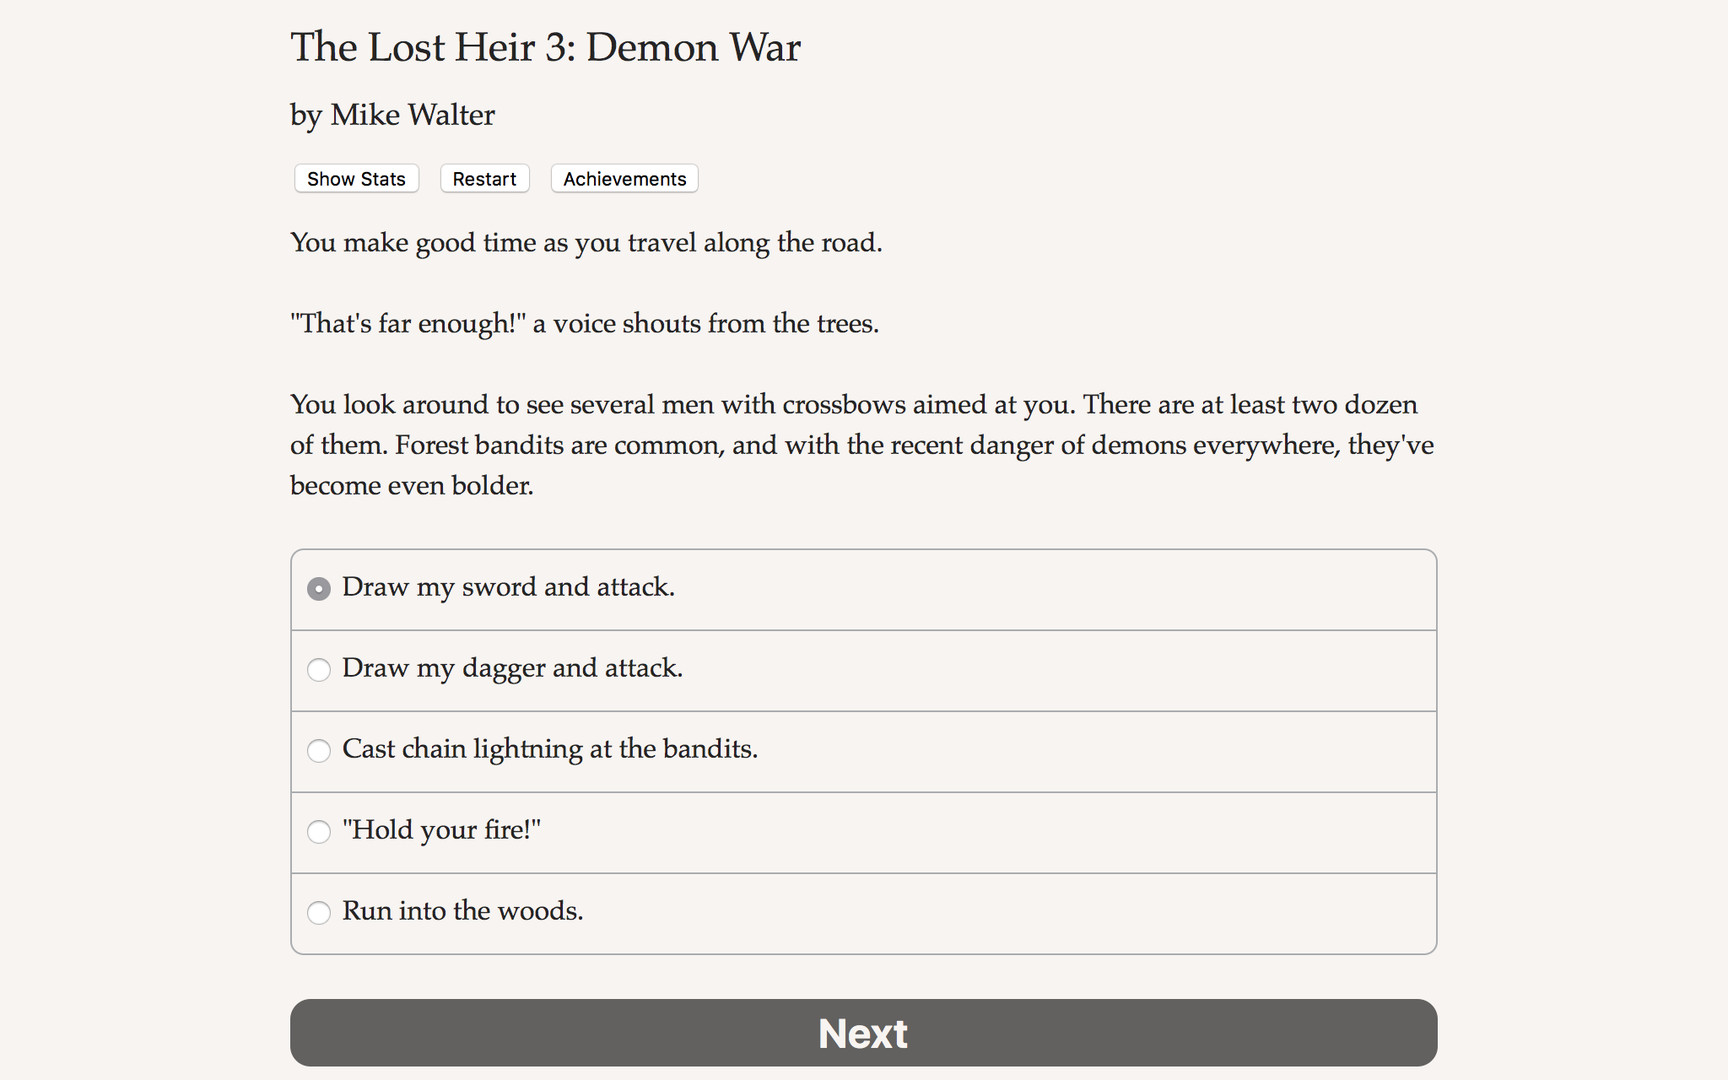 The Lost Heir 3: Demon War Featured Screenshot #1